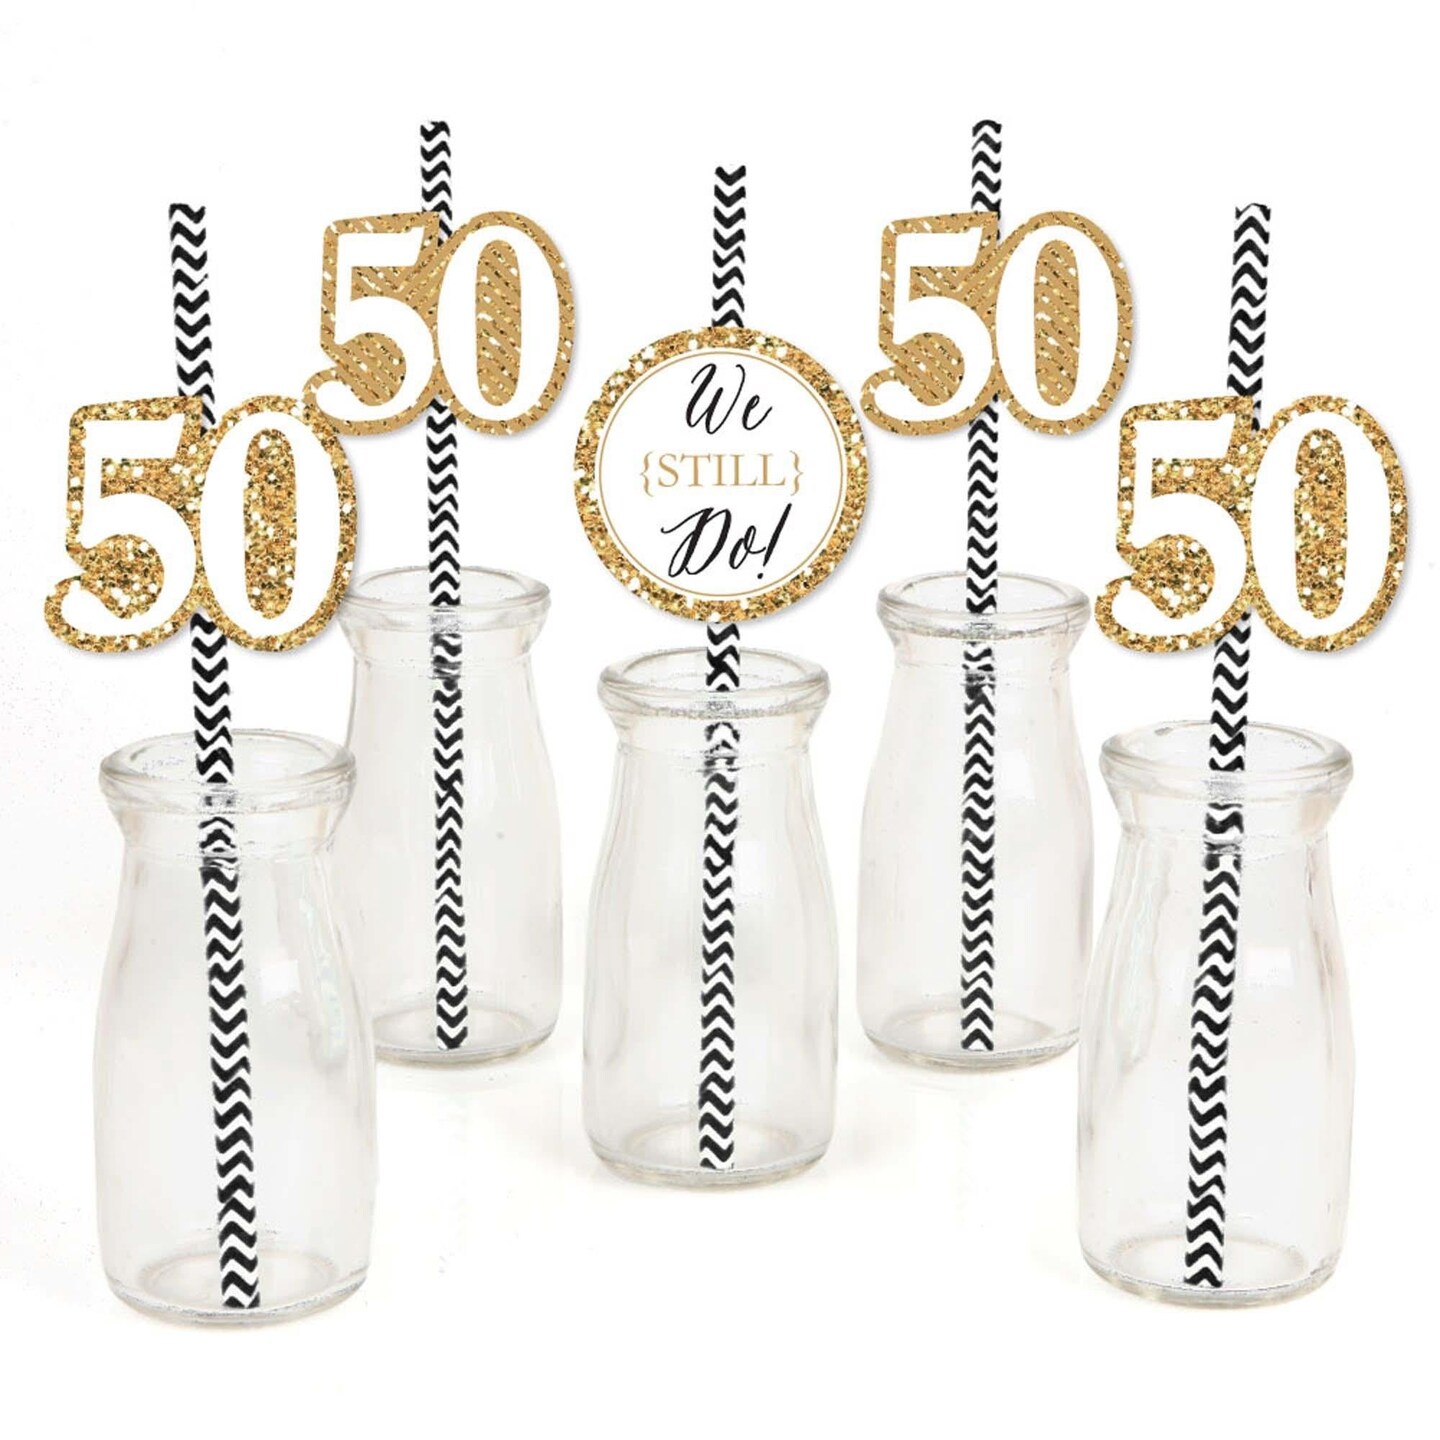 Big Dot of Happiness We Still Do - 50th Wedding Anniversary - Paper Straw Decor - Anniversary Party Striped Decorative Straws - Set of 24